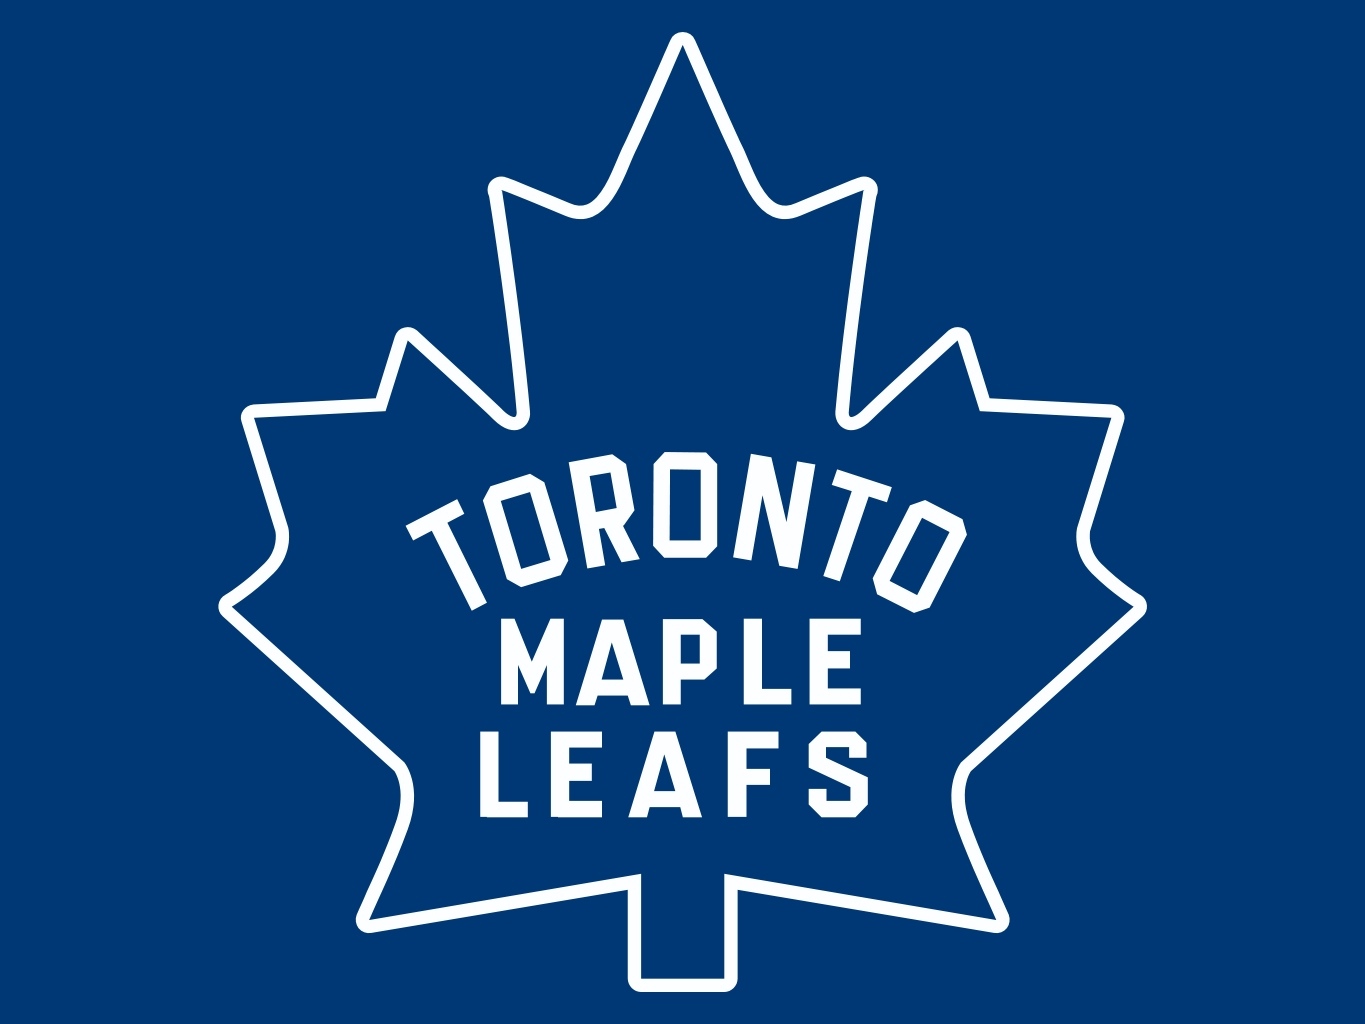 Url Printablecolourings Co Uk S Tornoto Maple Leafs Logo